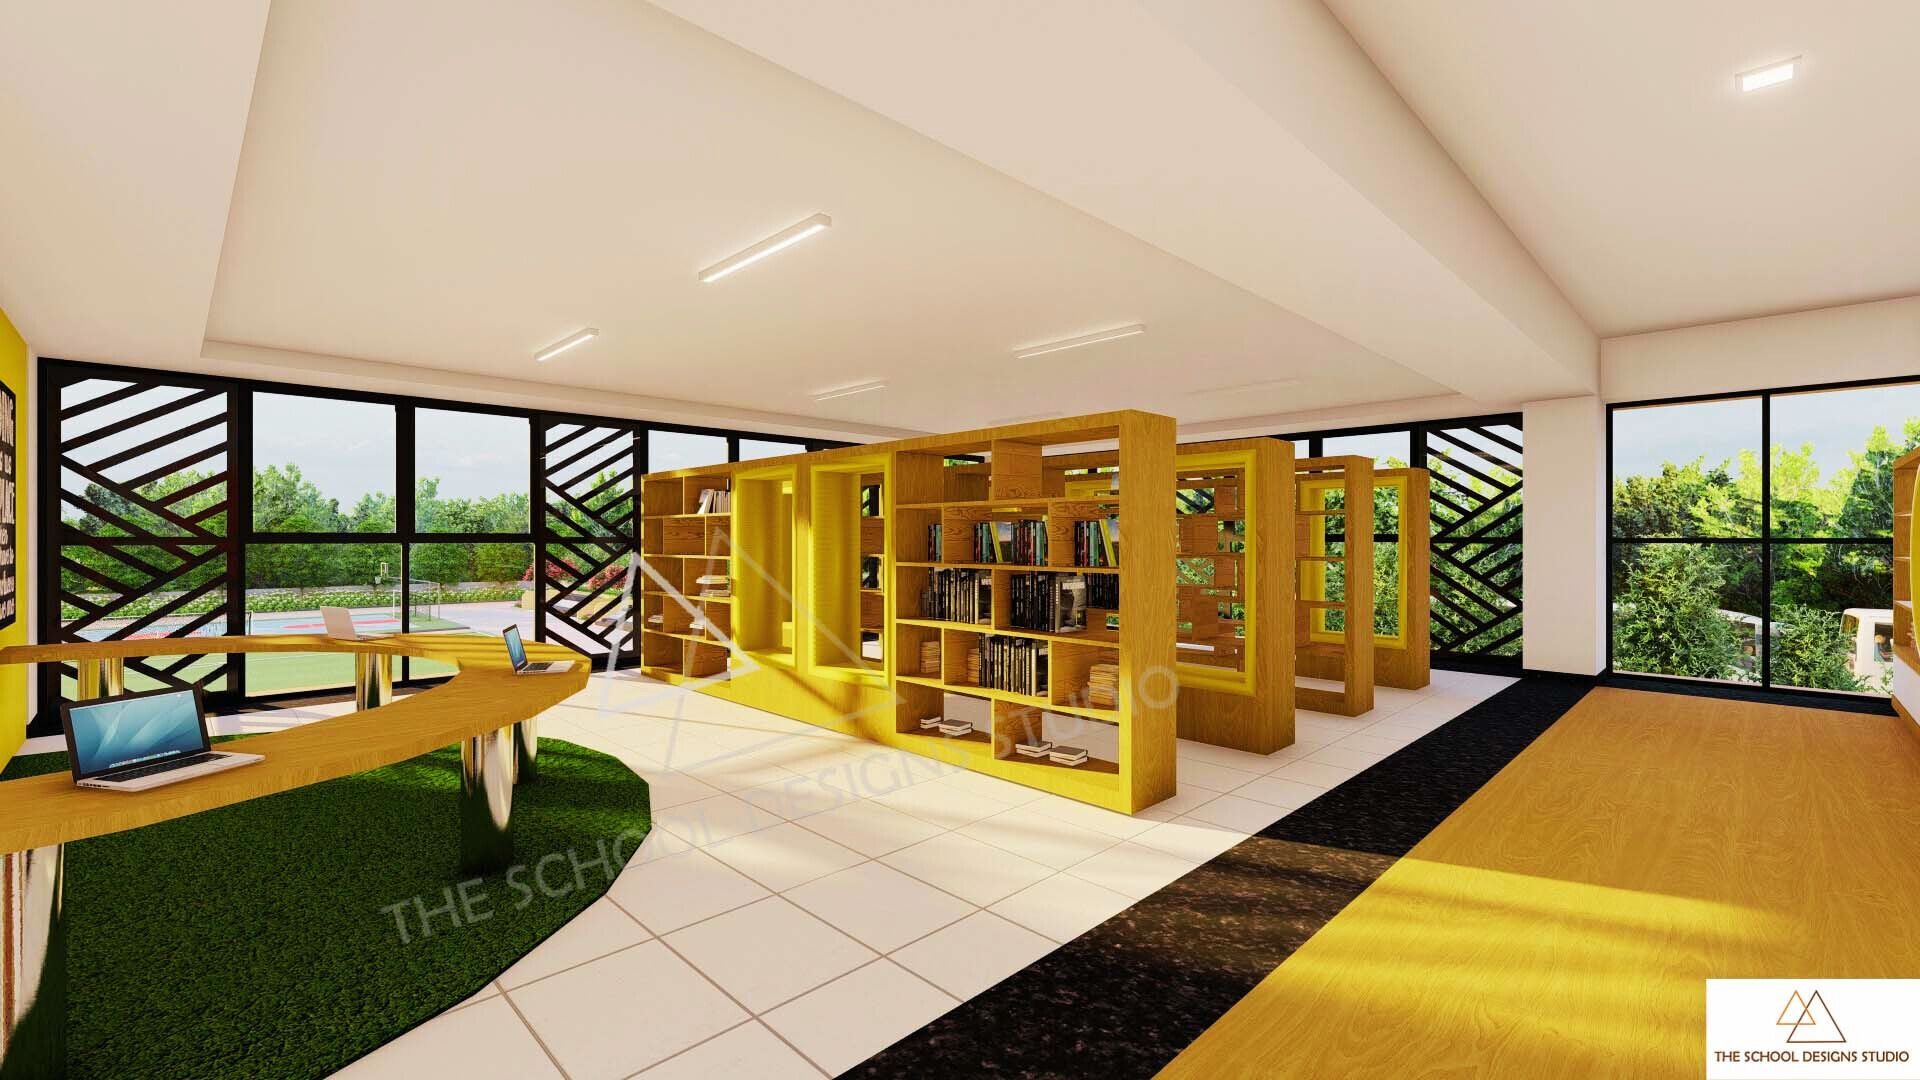 Pragati Vidyalaya, Challakere, Karnataka. Designed By The School Designs Studio (Top School Architects in India)- Library